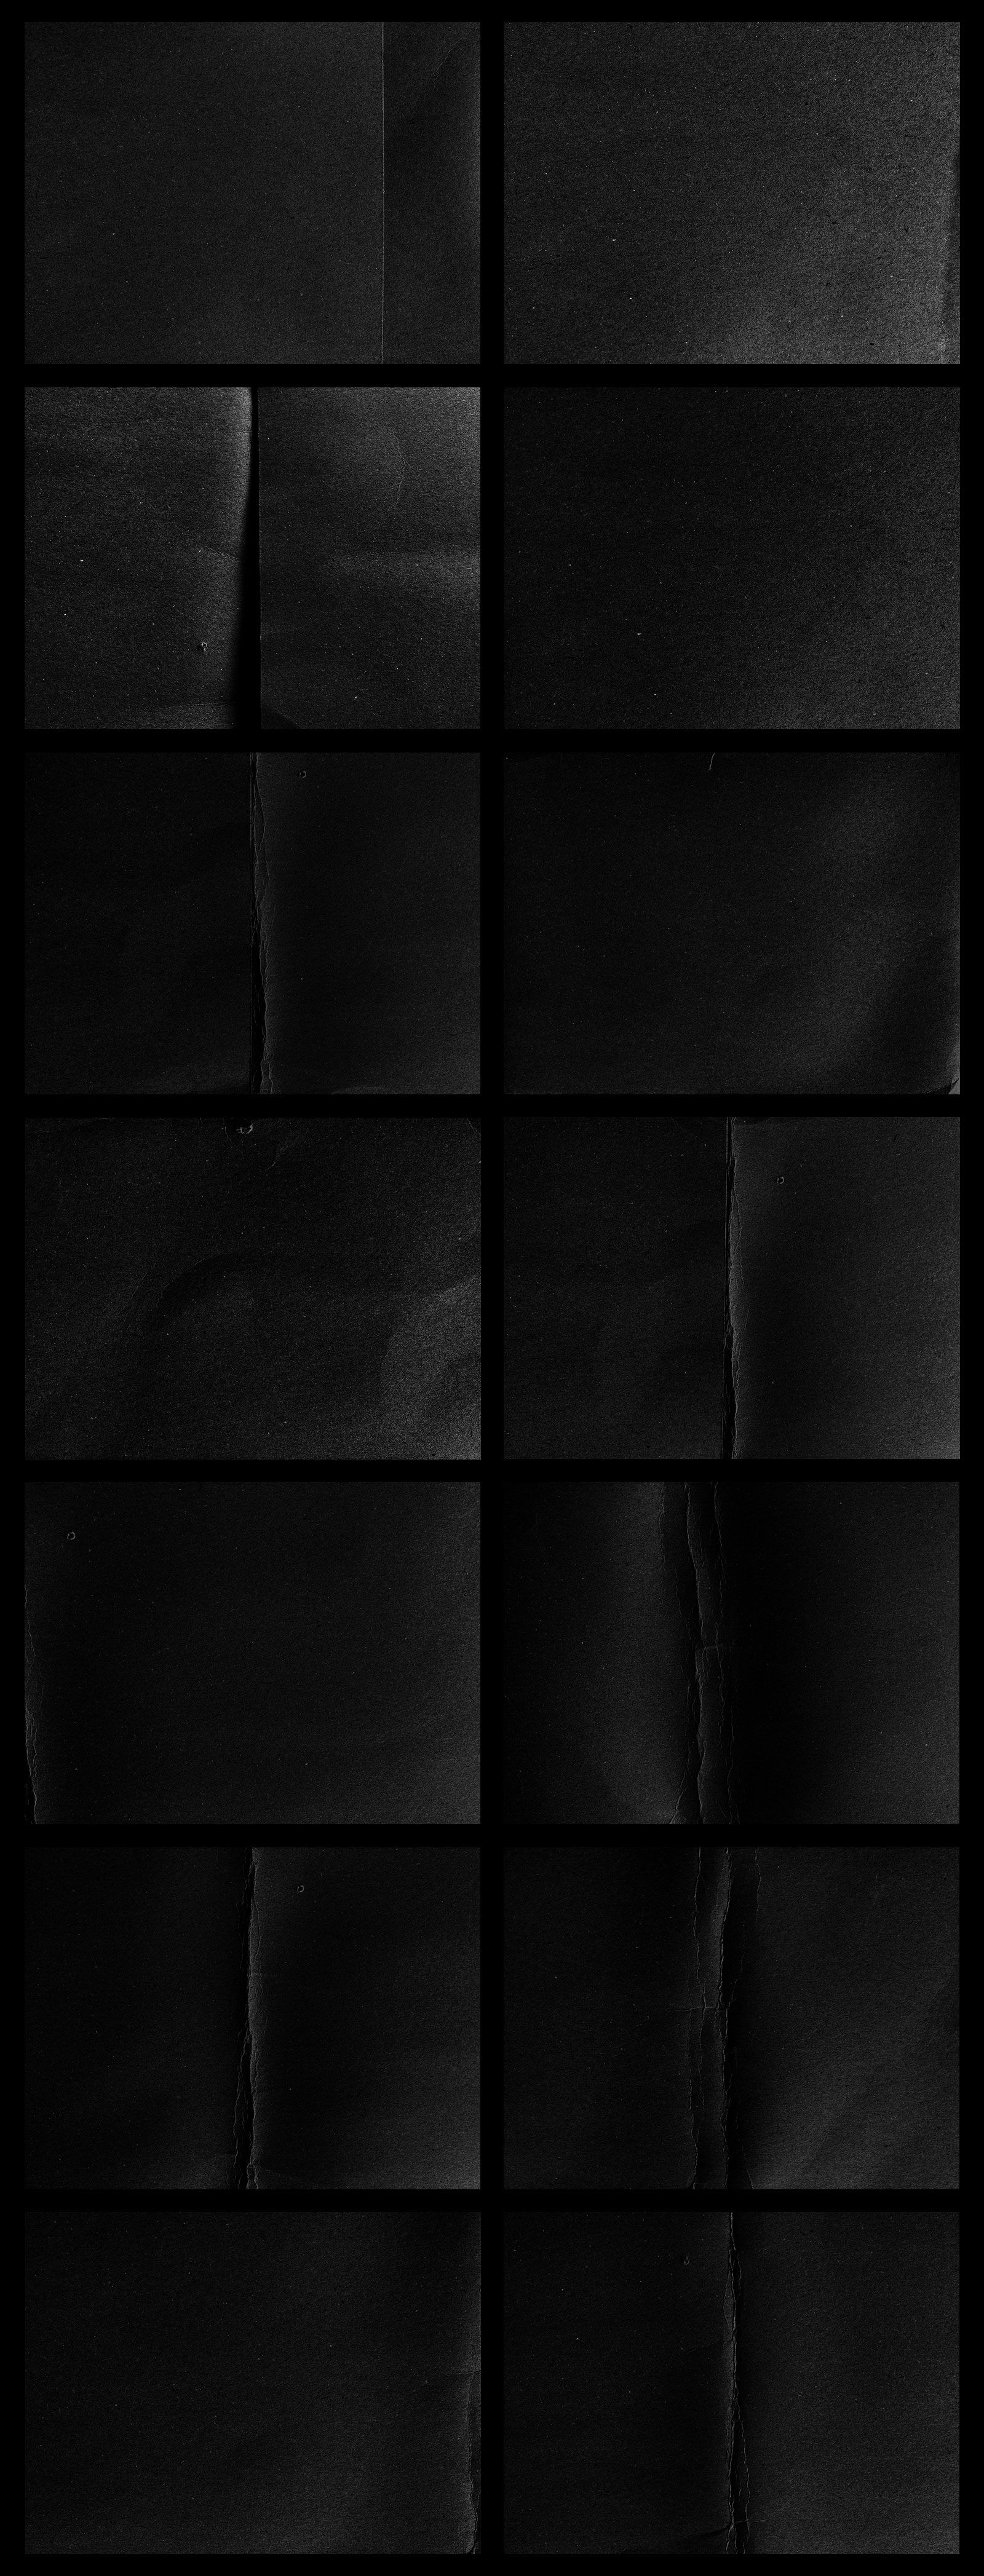 Black paper overlay textures